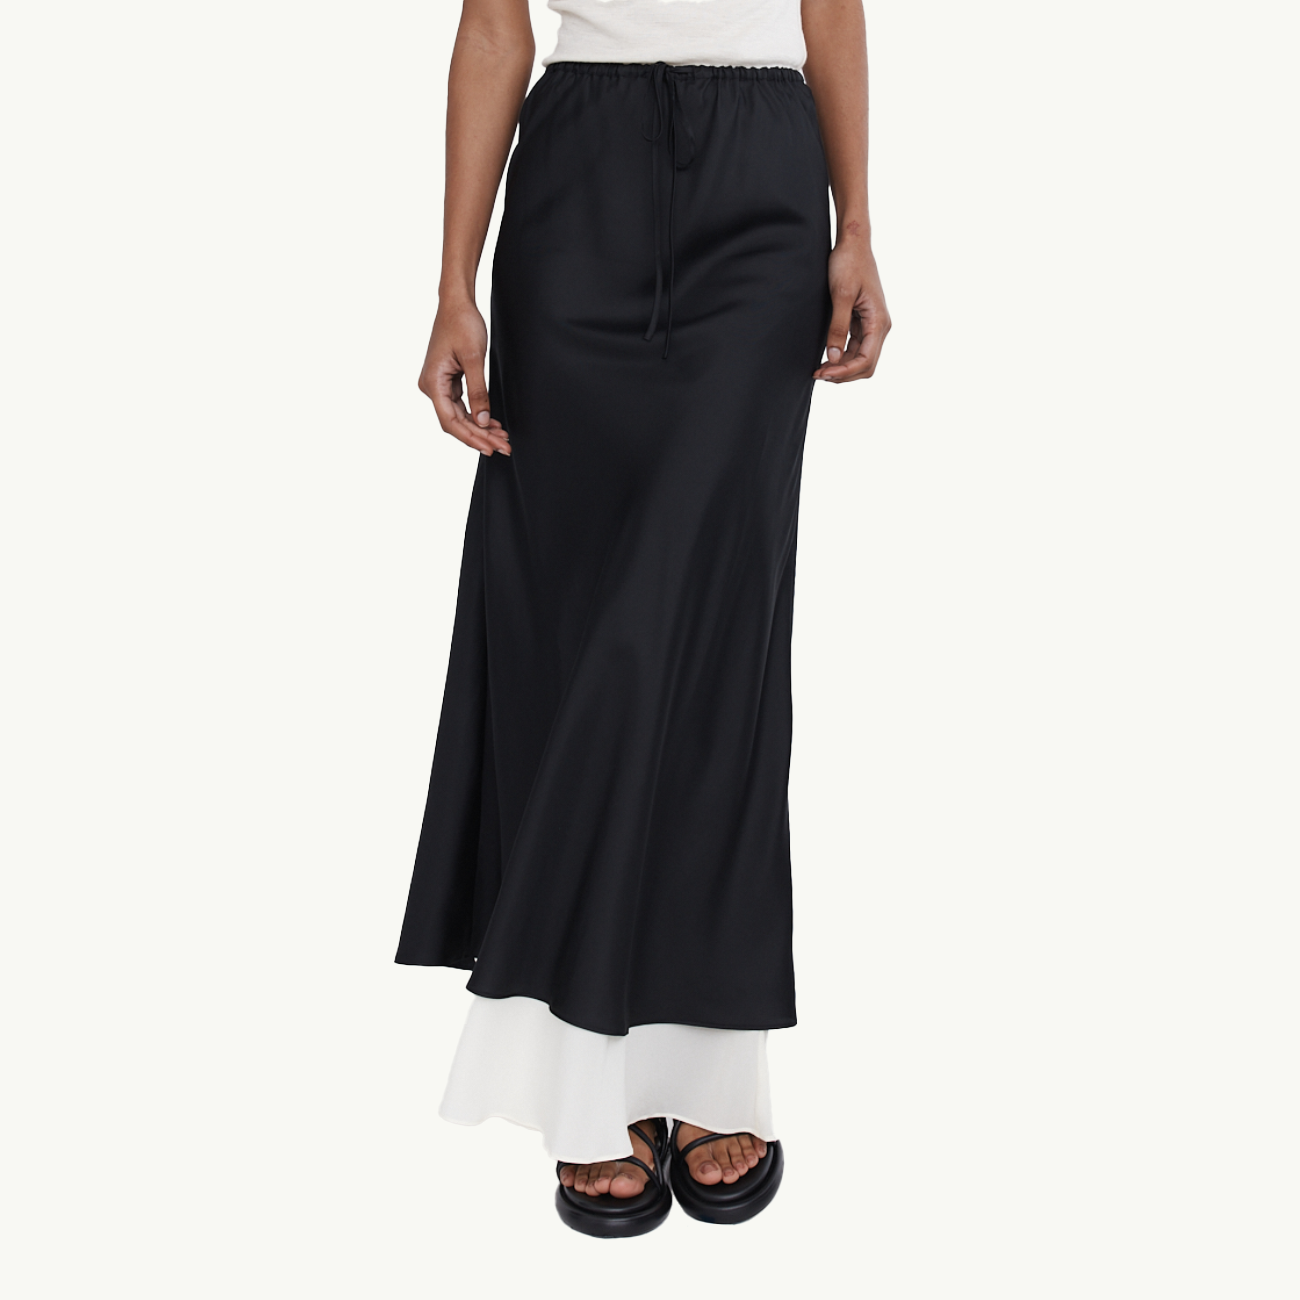 Charly Skirt - Black/Ivory